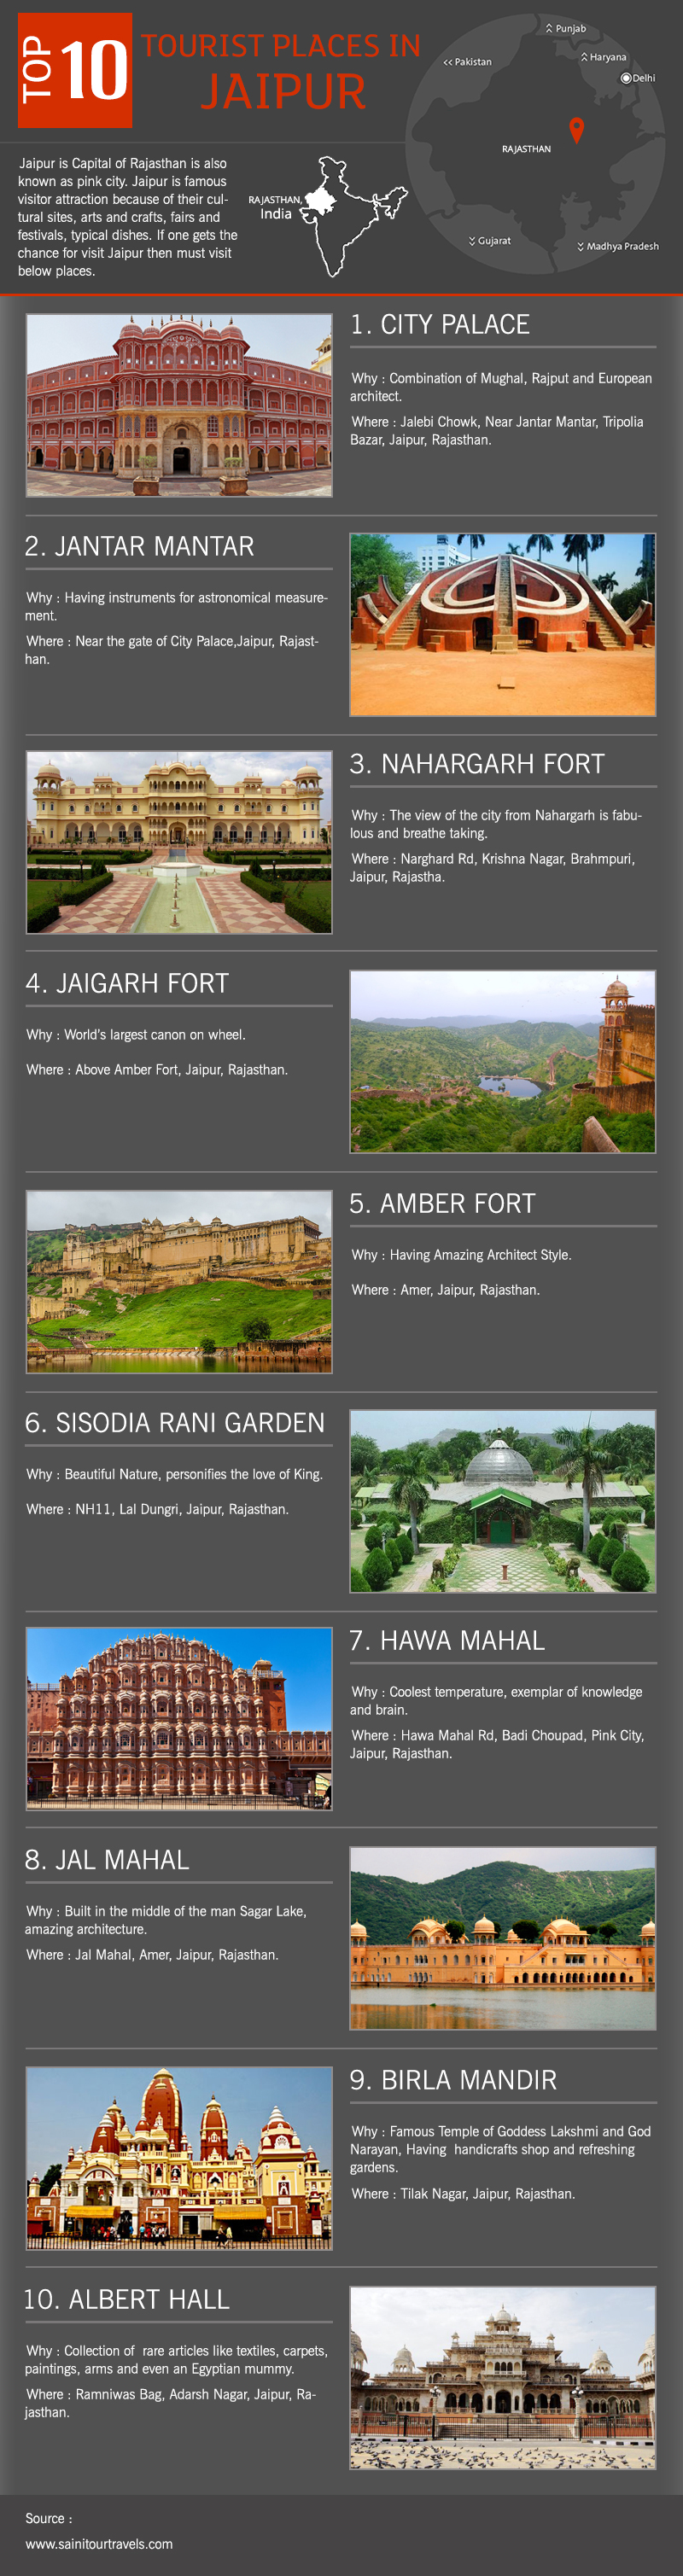 Top 10 Tourist Places in Jaipur